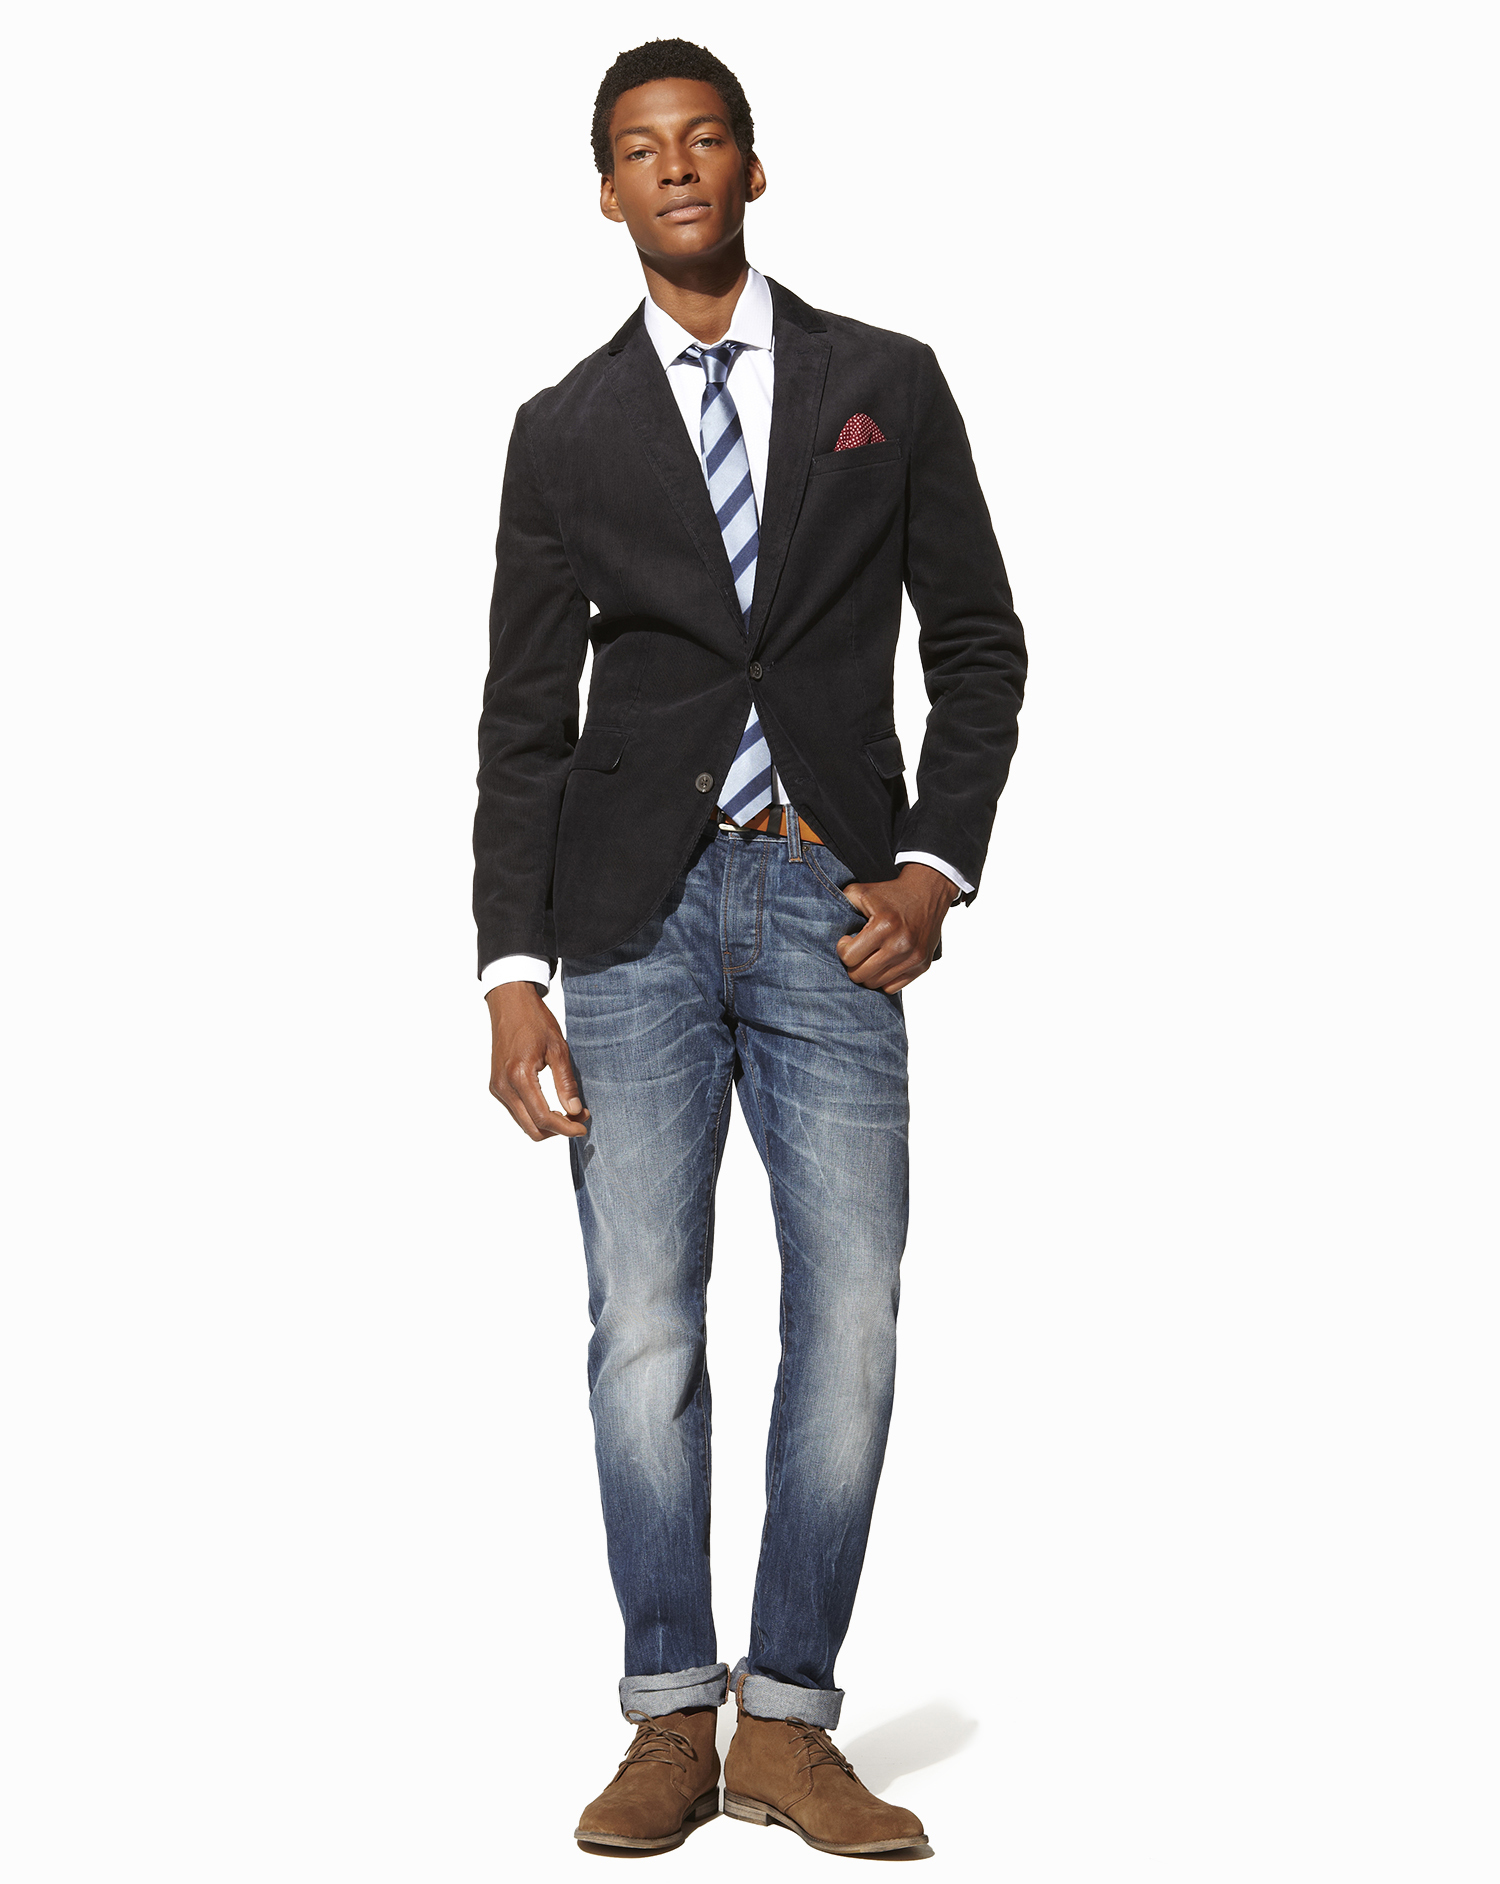 blazer-dress-shirt-jeans-desert-boots-tie-pocket-square-belt-original-10259.jpg